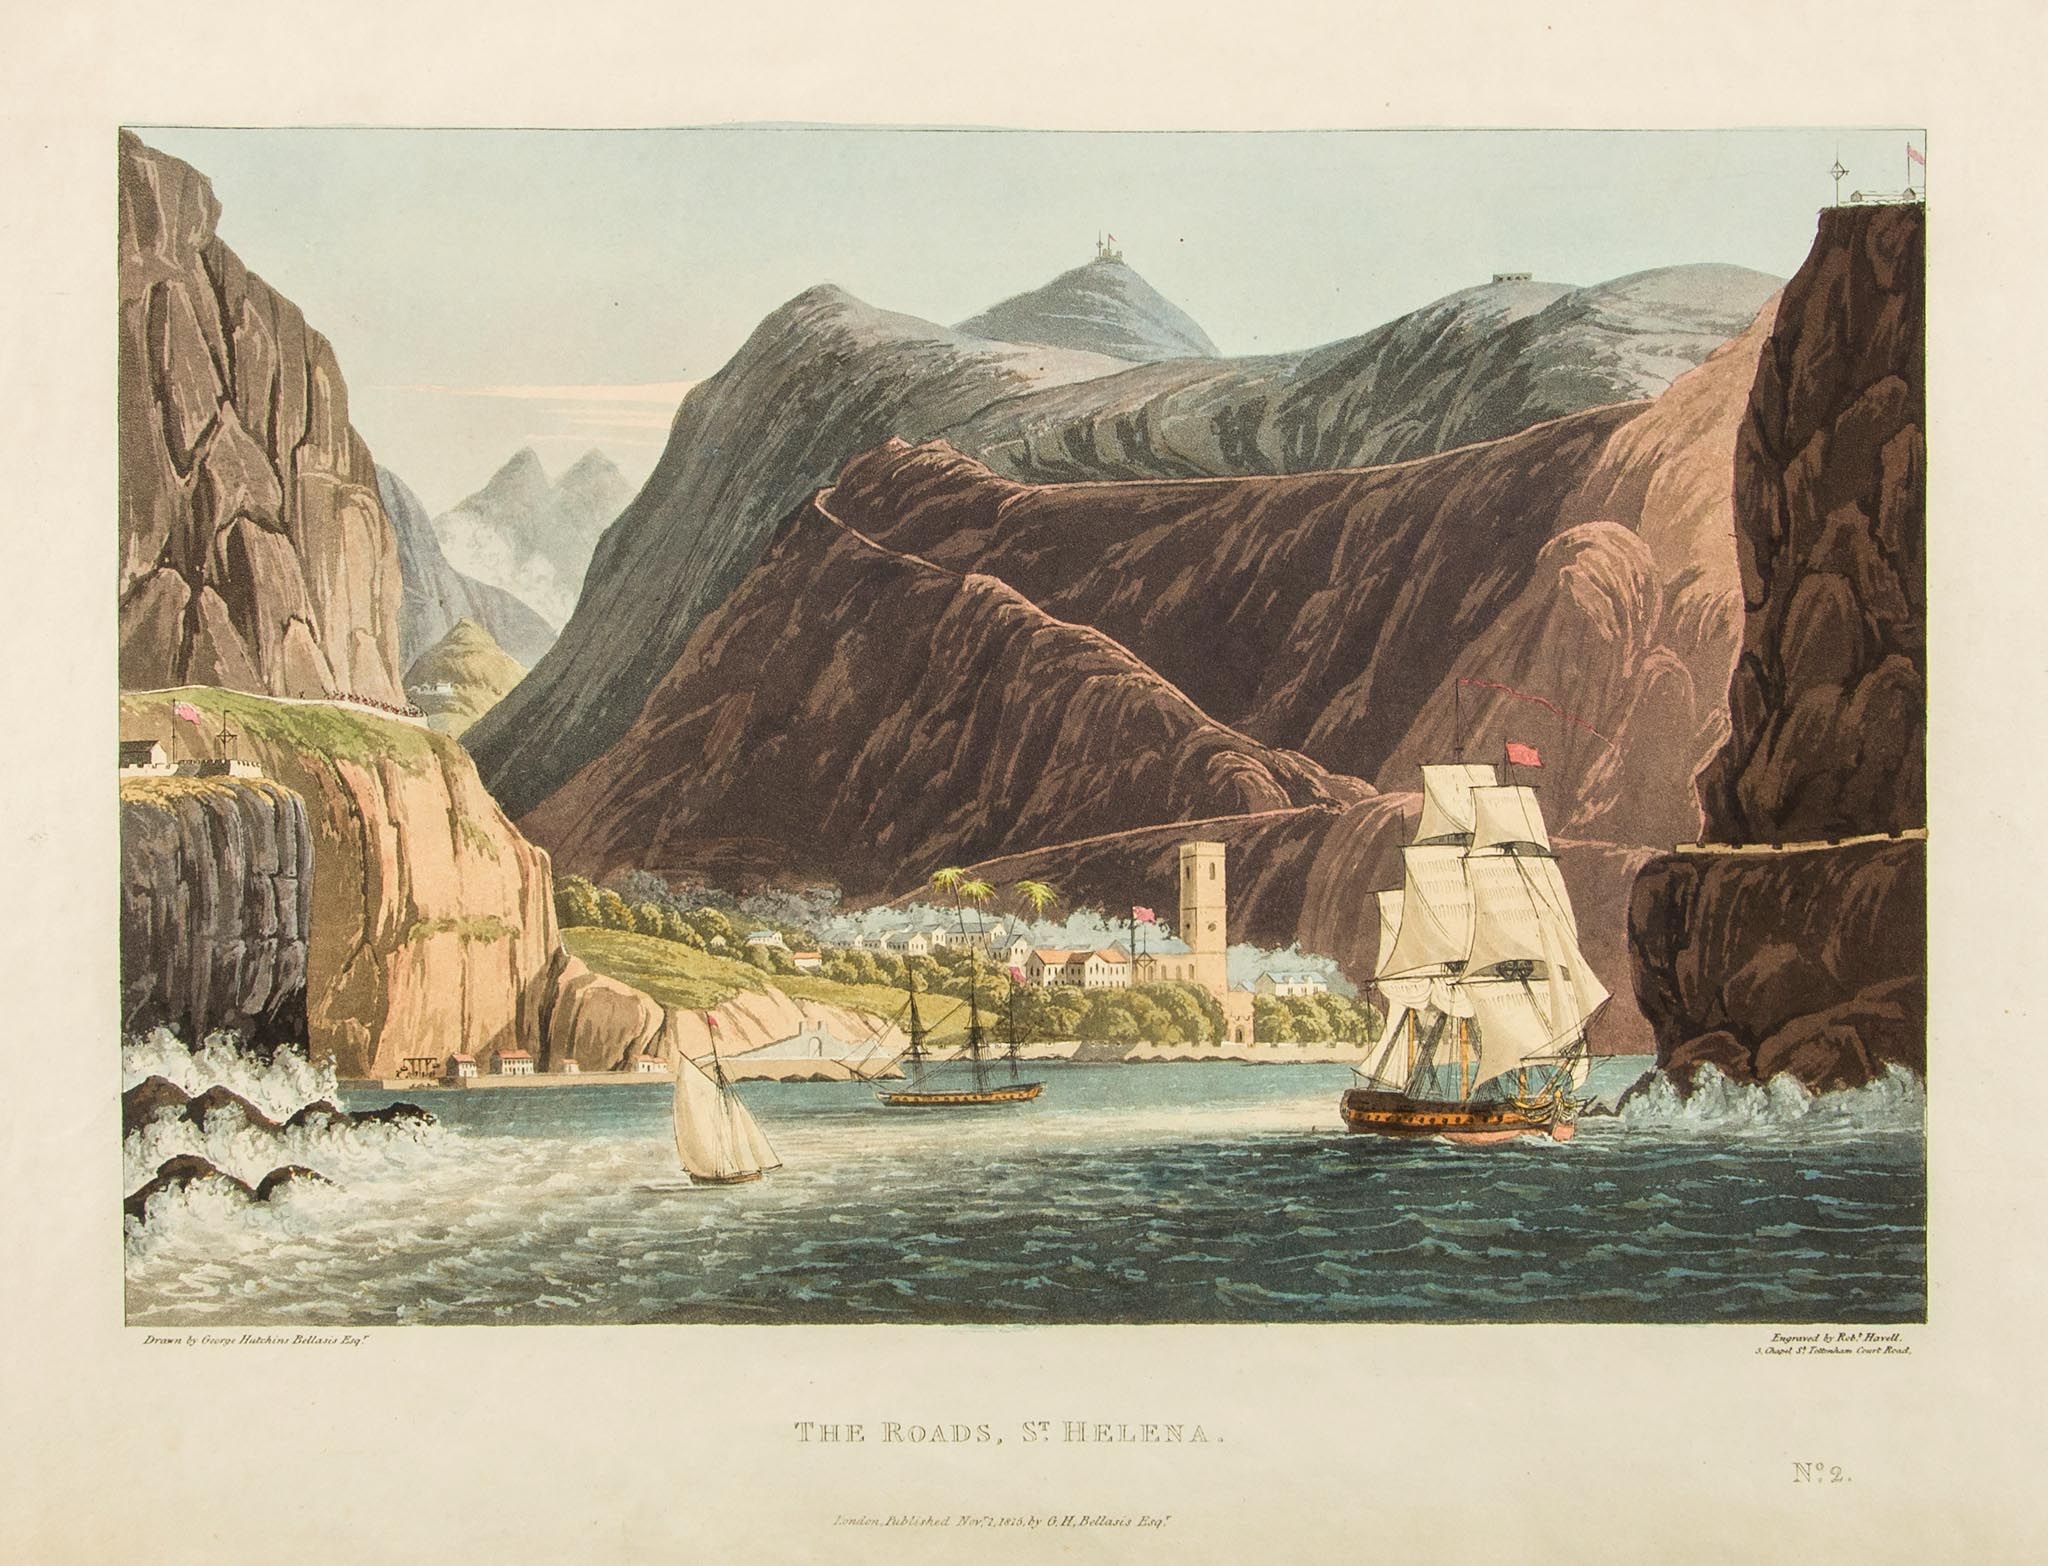 Atlantic.- Bellasis (George Hutchins) - Views of Saint Helena, first edition , dedication f. to